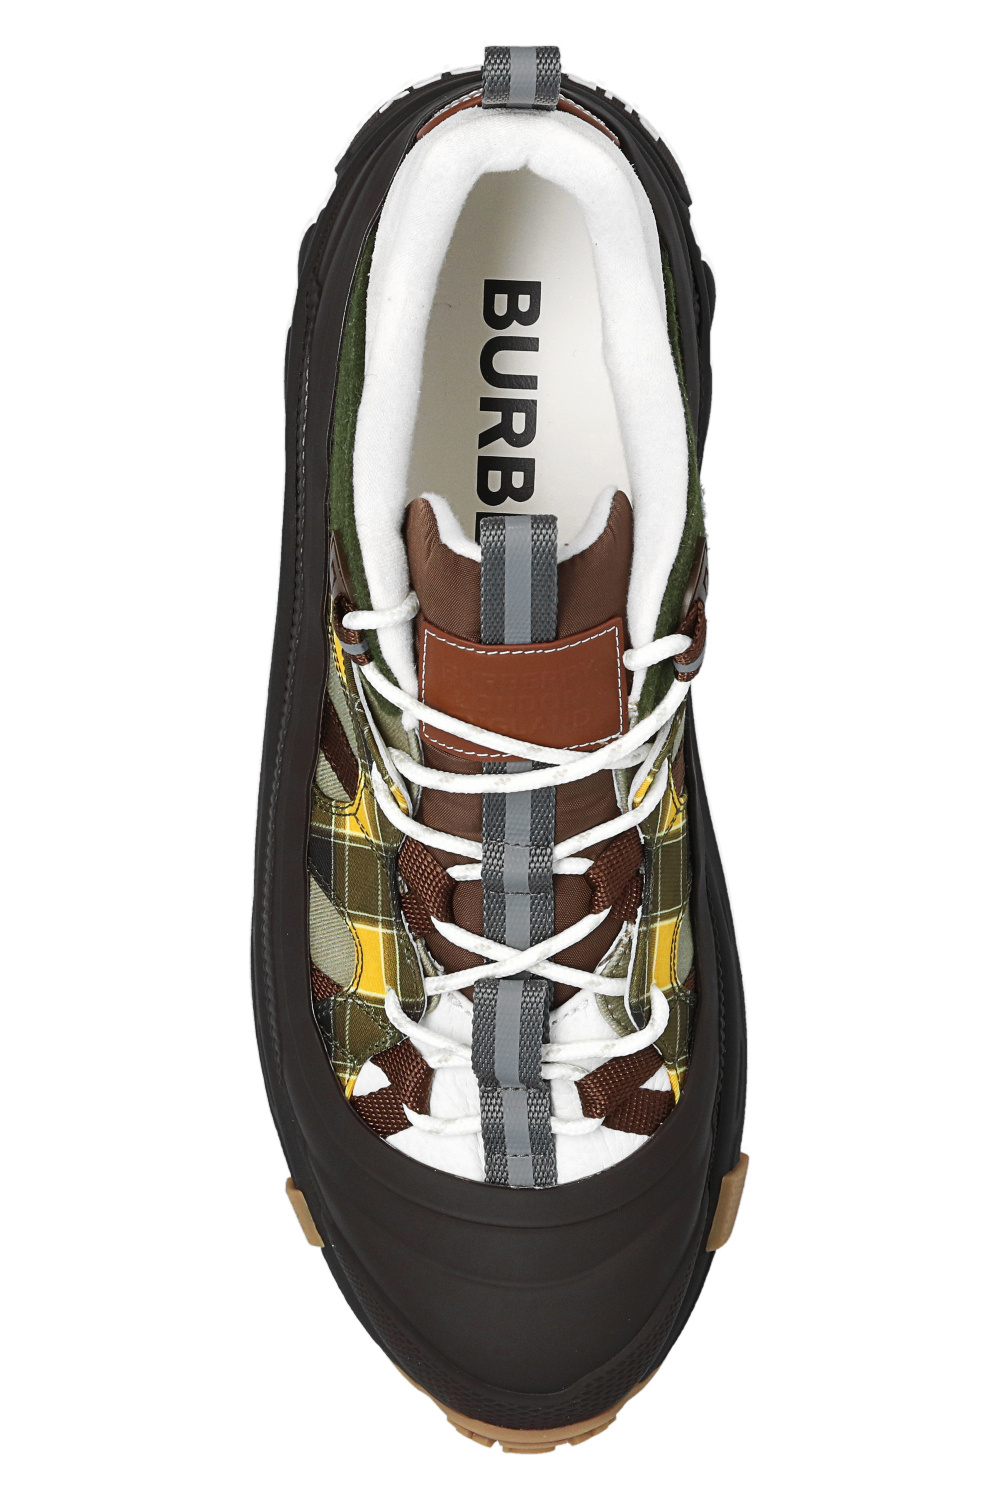 Burberry ‘Arthur’ sneakers